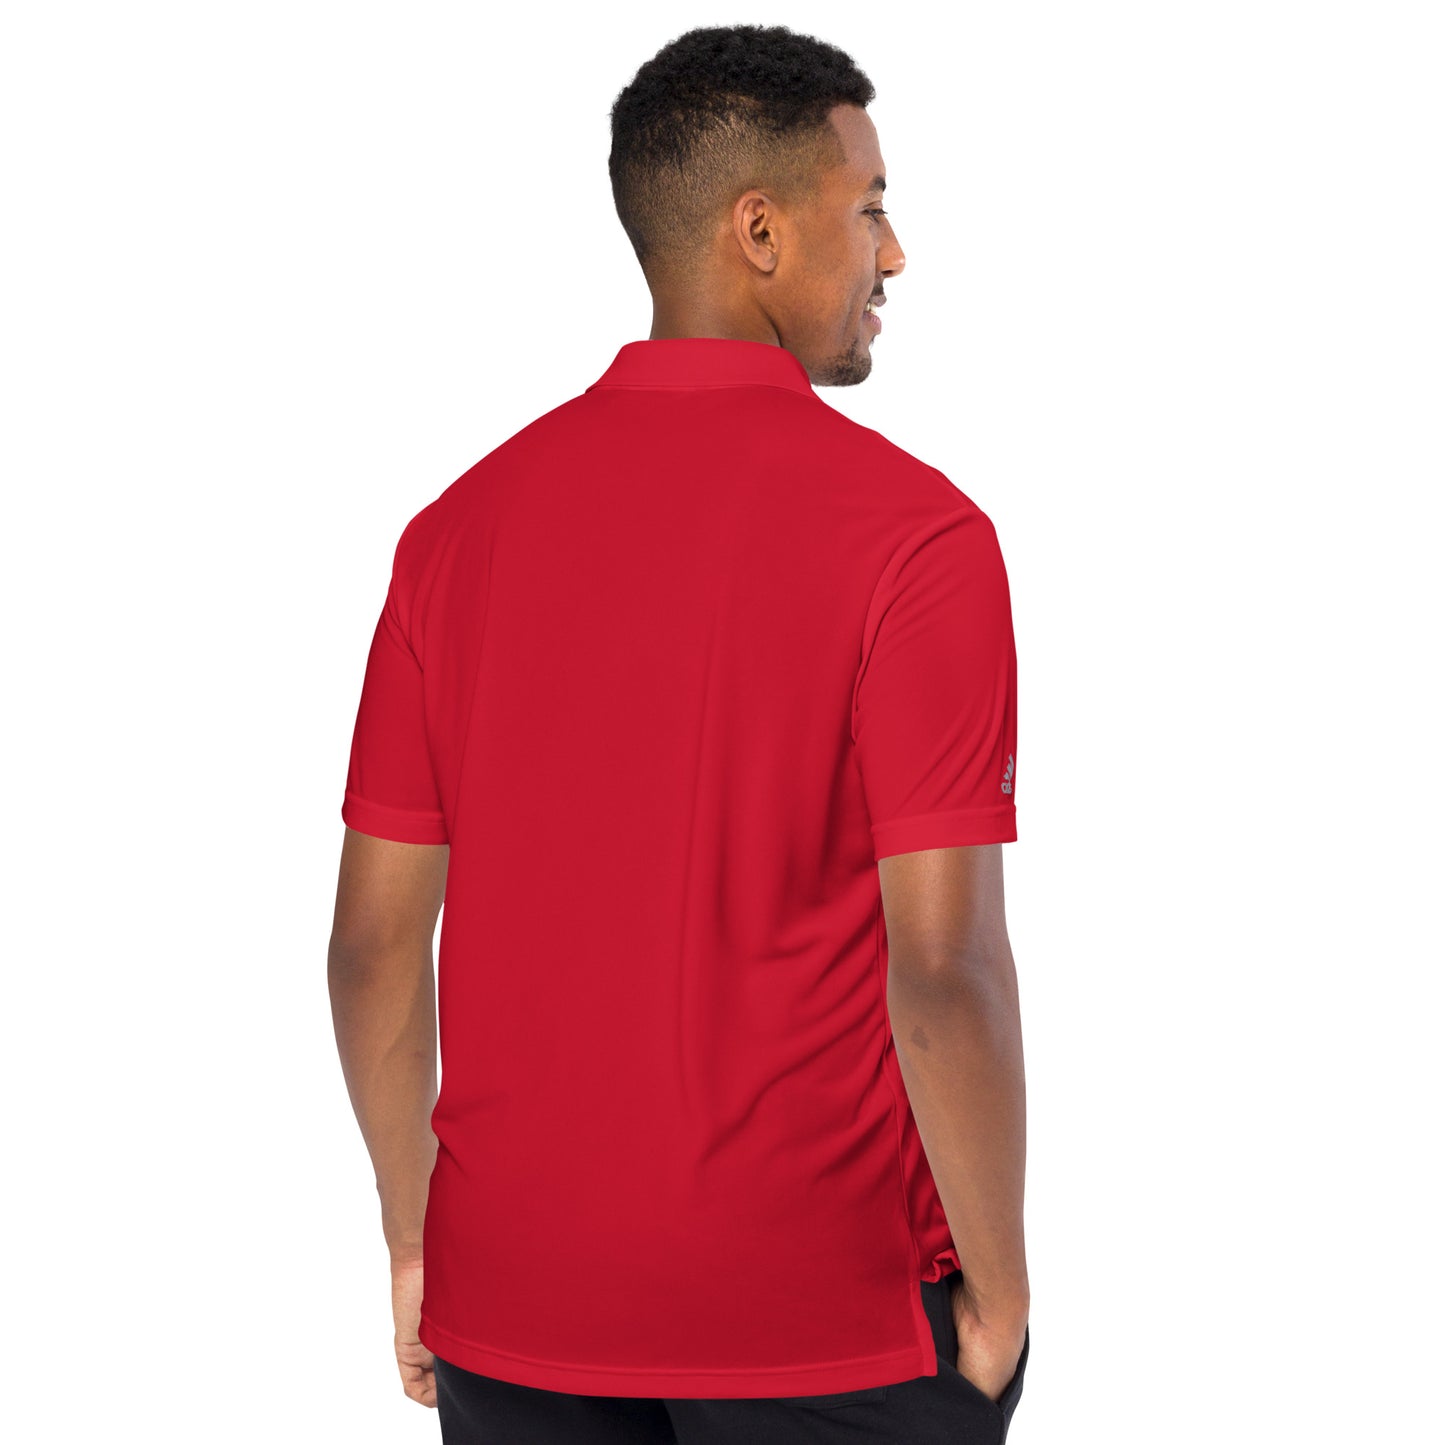 Adidas Konaloo Shirt Elevate your style with the Konaloo Brand Men's Designed Performance Polo Shirt